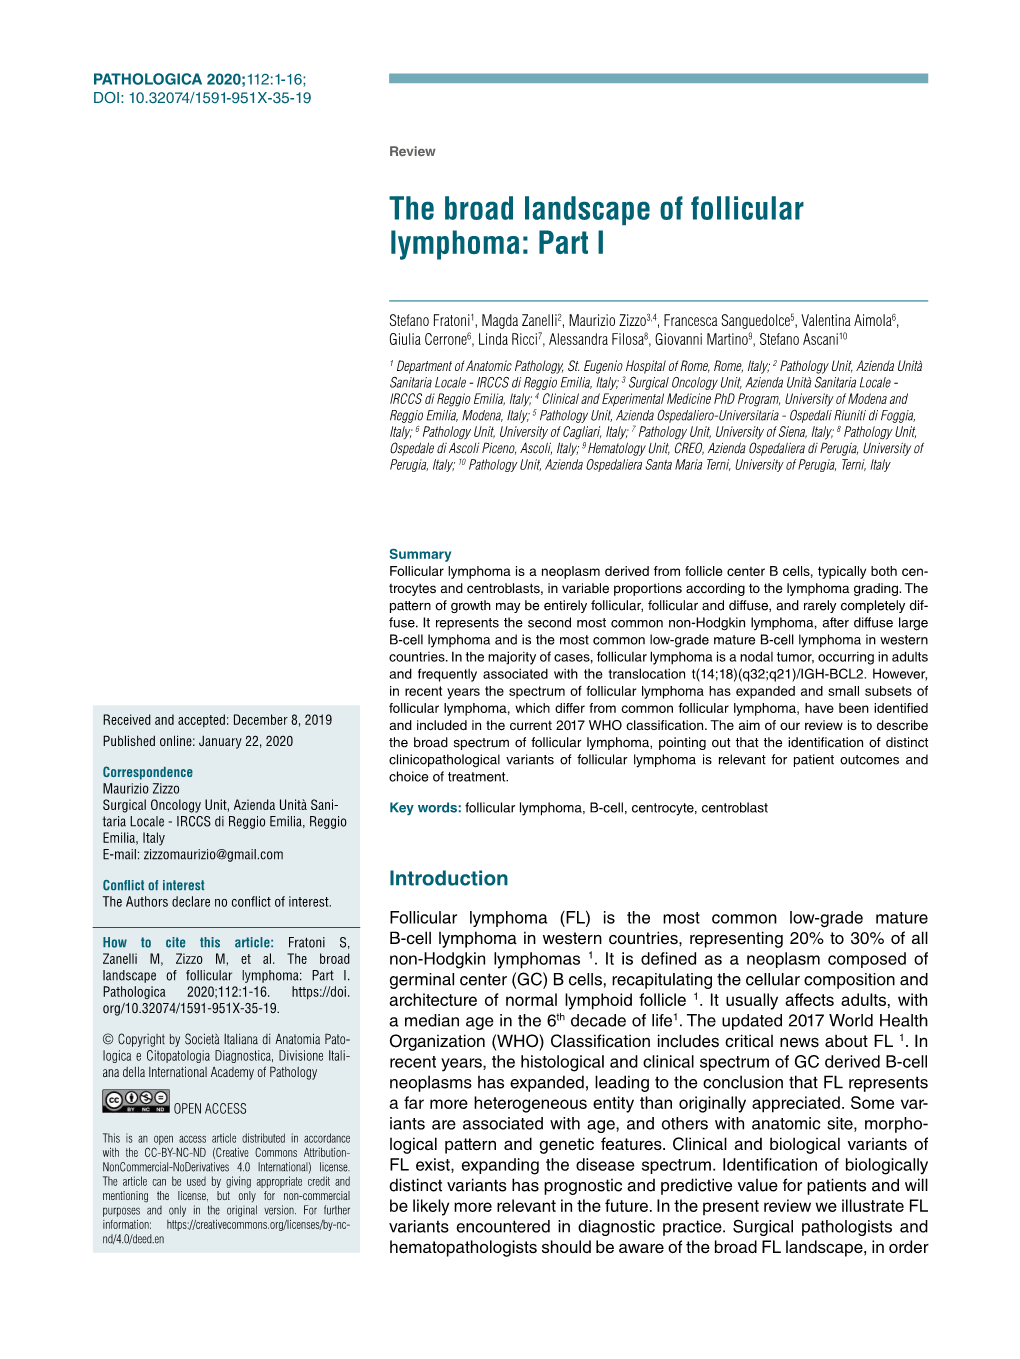 The Broad Landscape of Follicular Lymphoma: Part I